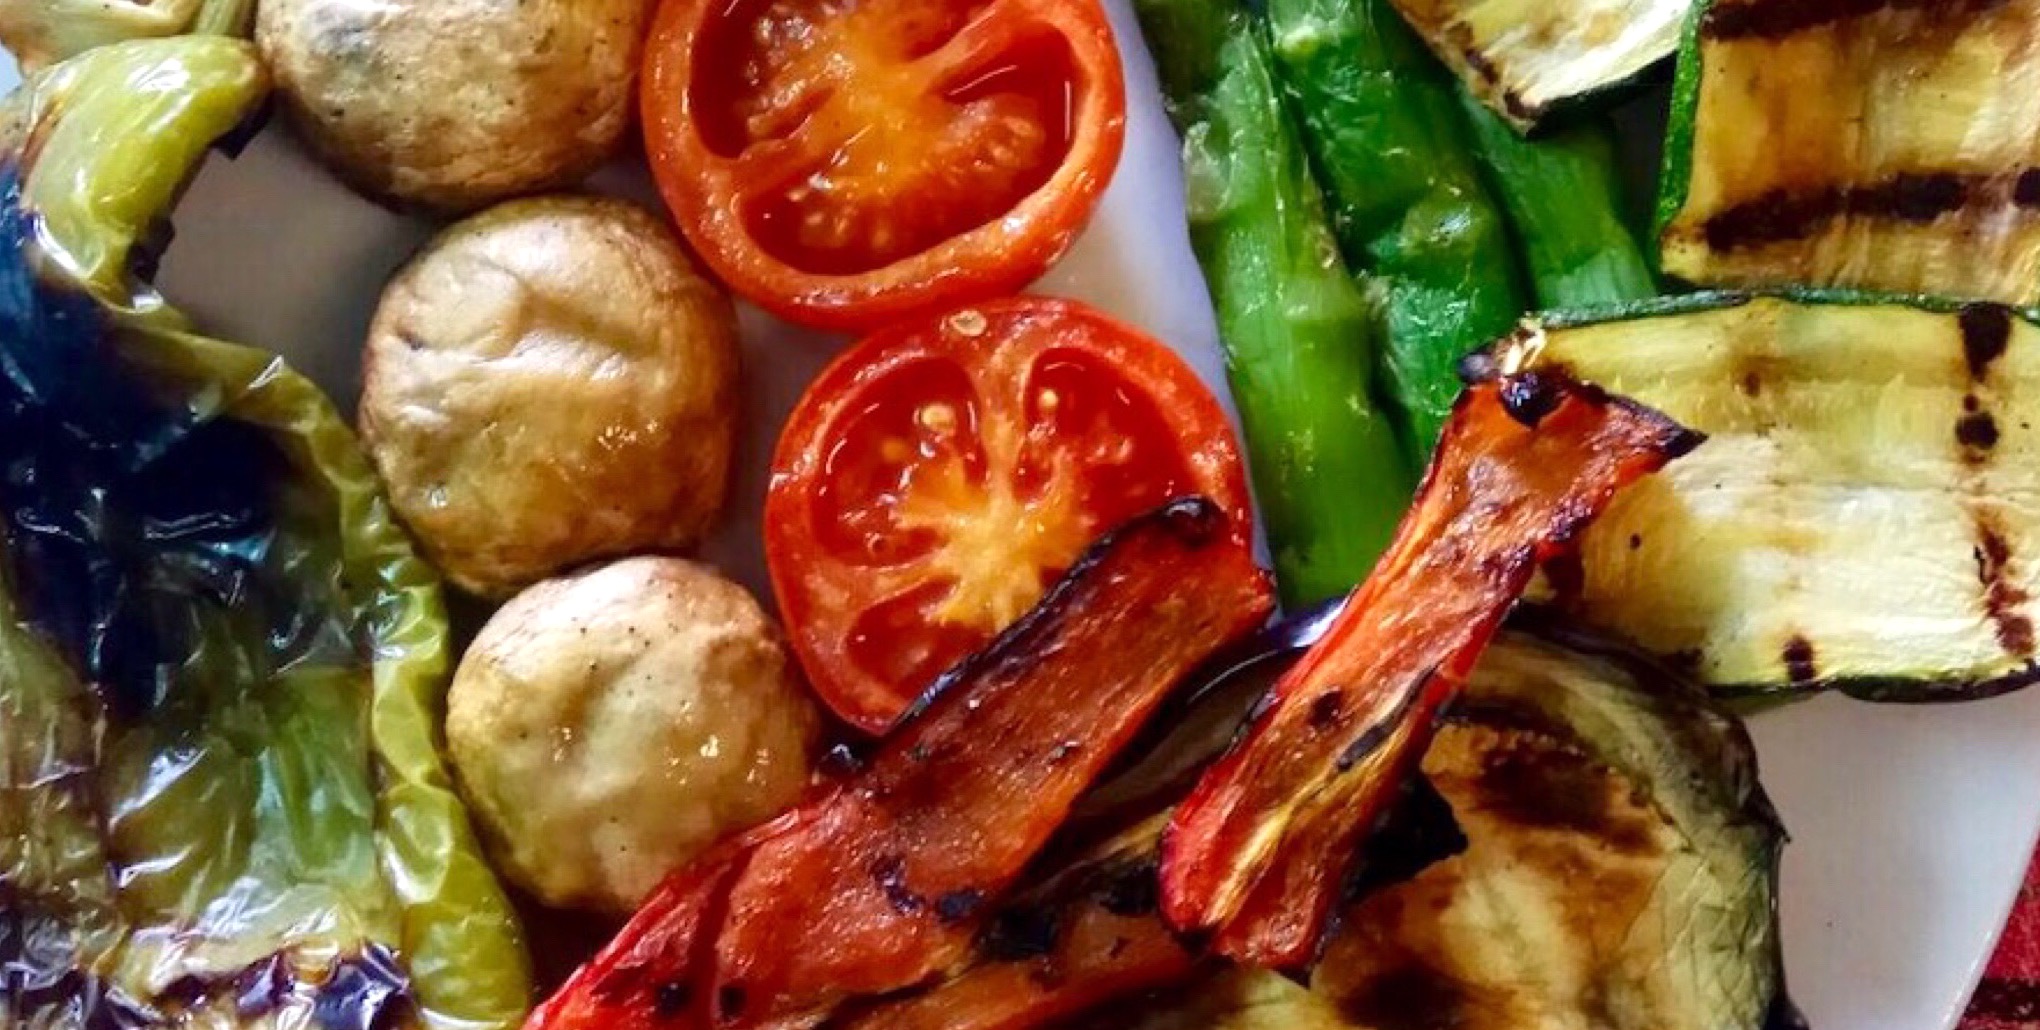 verduras a la brasa del huerto restaurant masia can jane barcelona